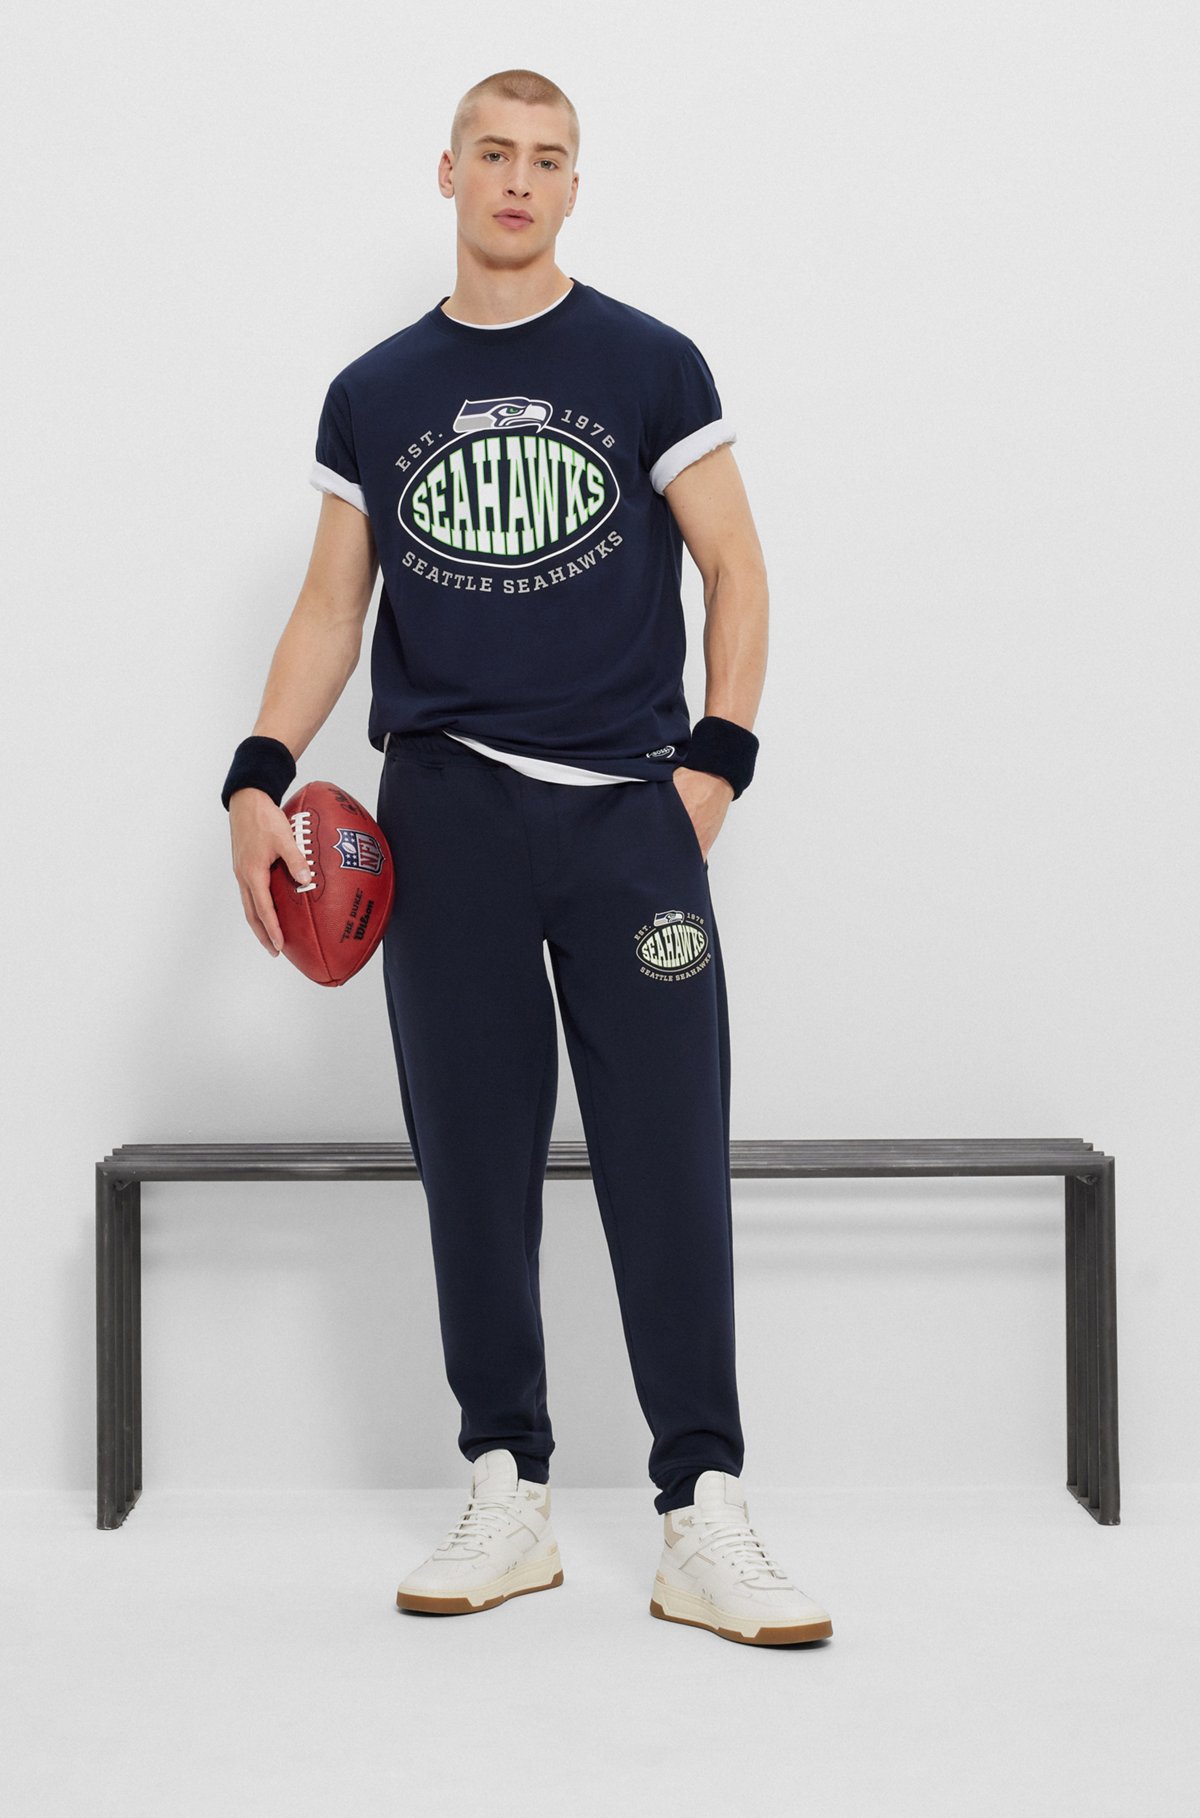  T-shirt en coton stretch BOSS x NFL avec logo du partenariat, Seahawks